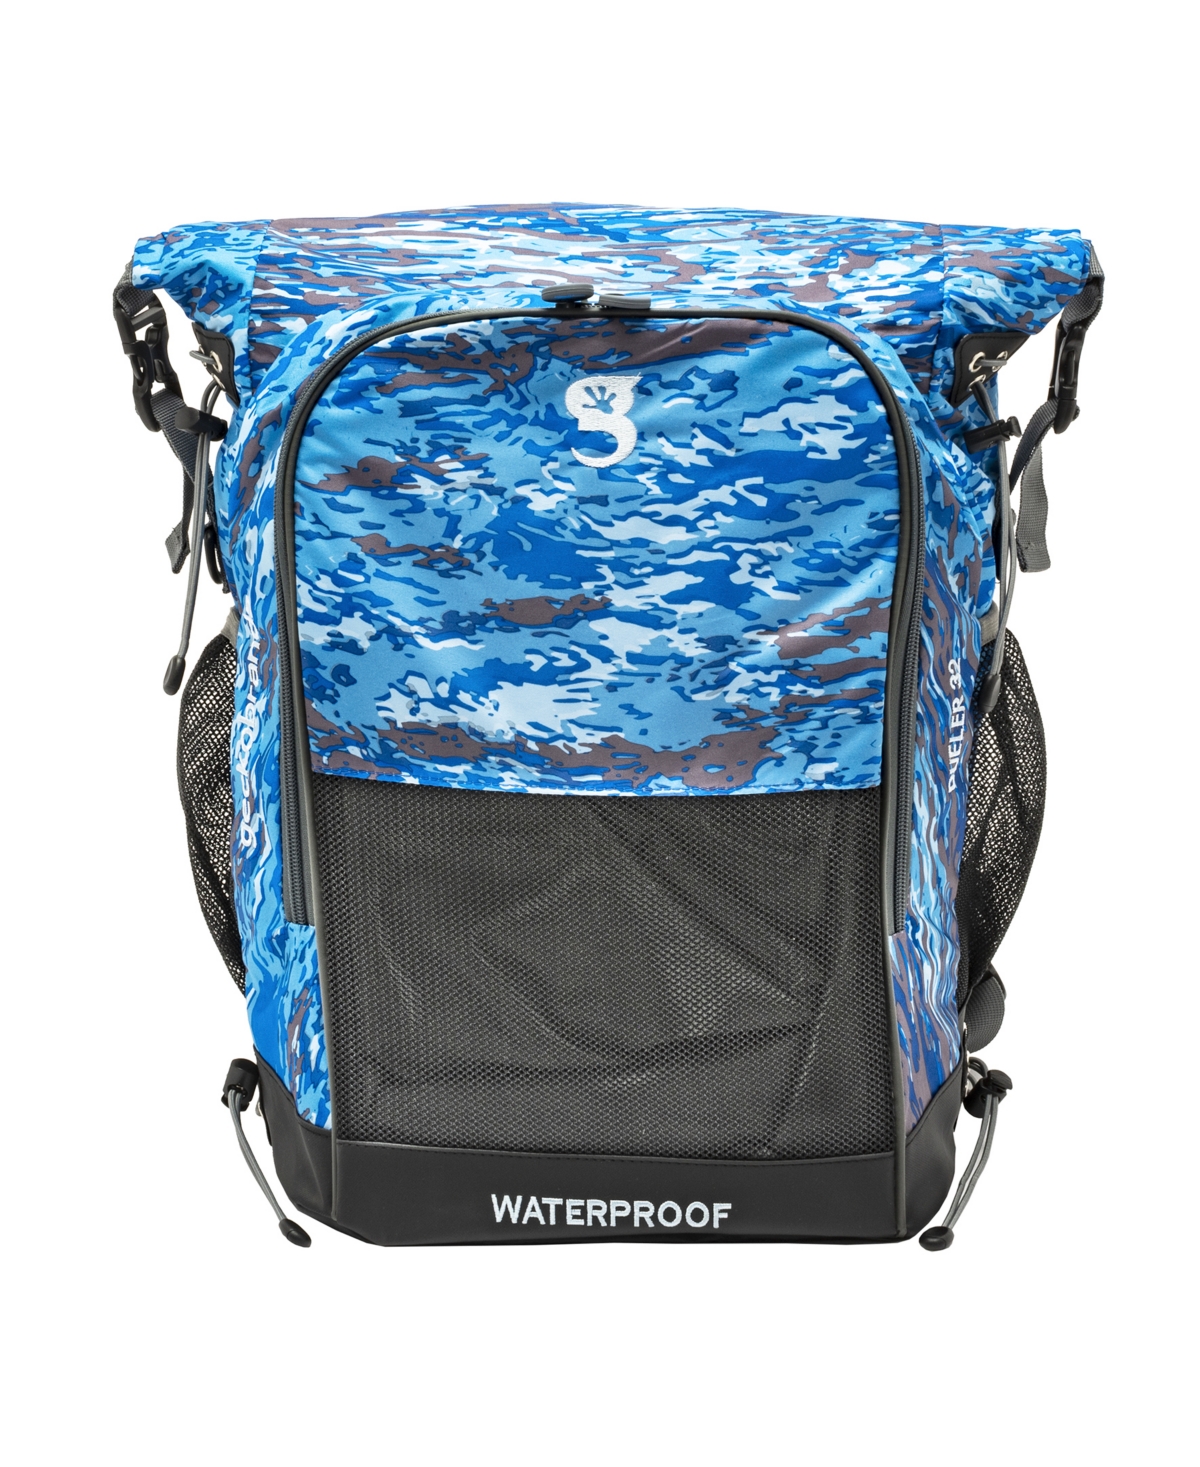 Dueler All Sport Water-Resistant 32 Liters Backpack - Black, Gray